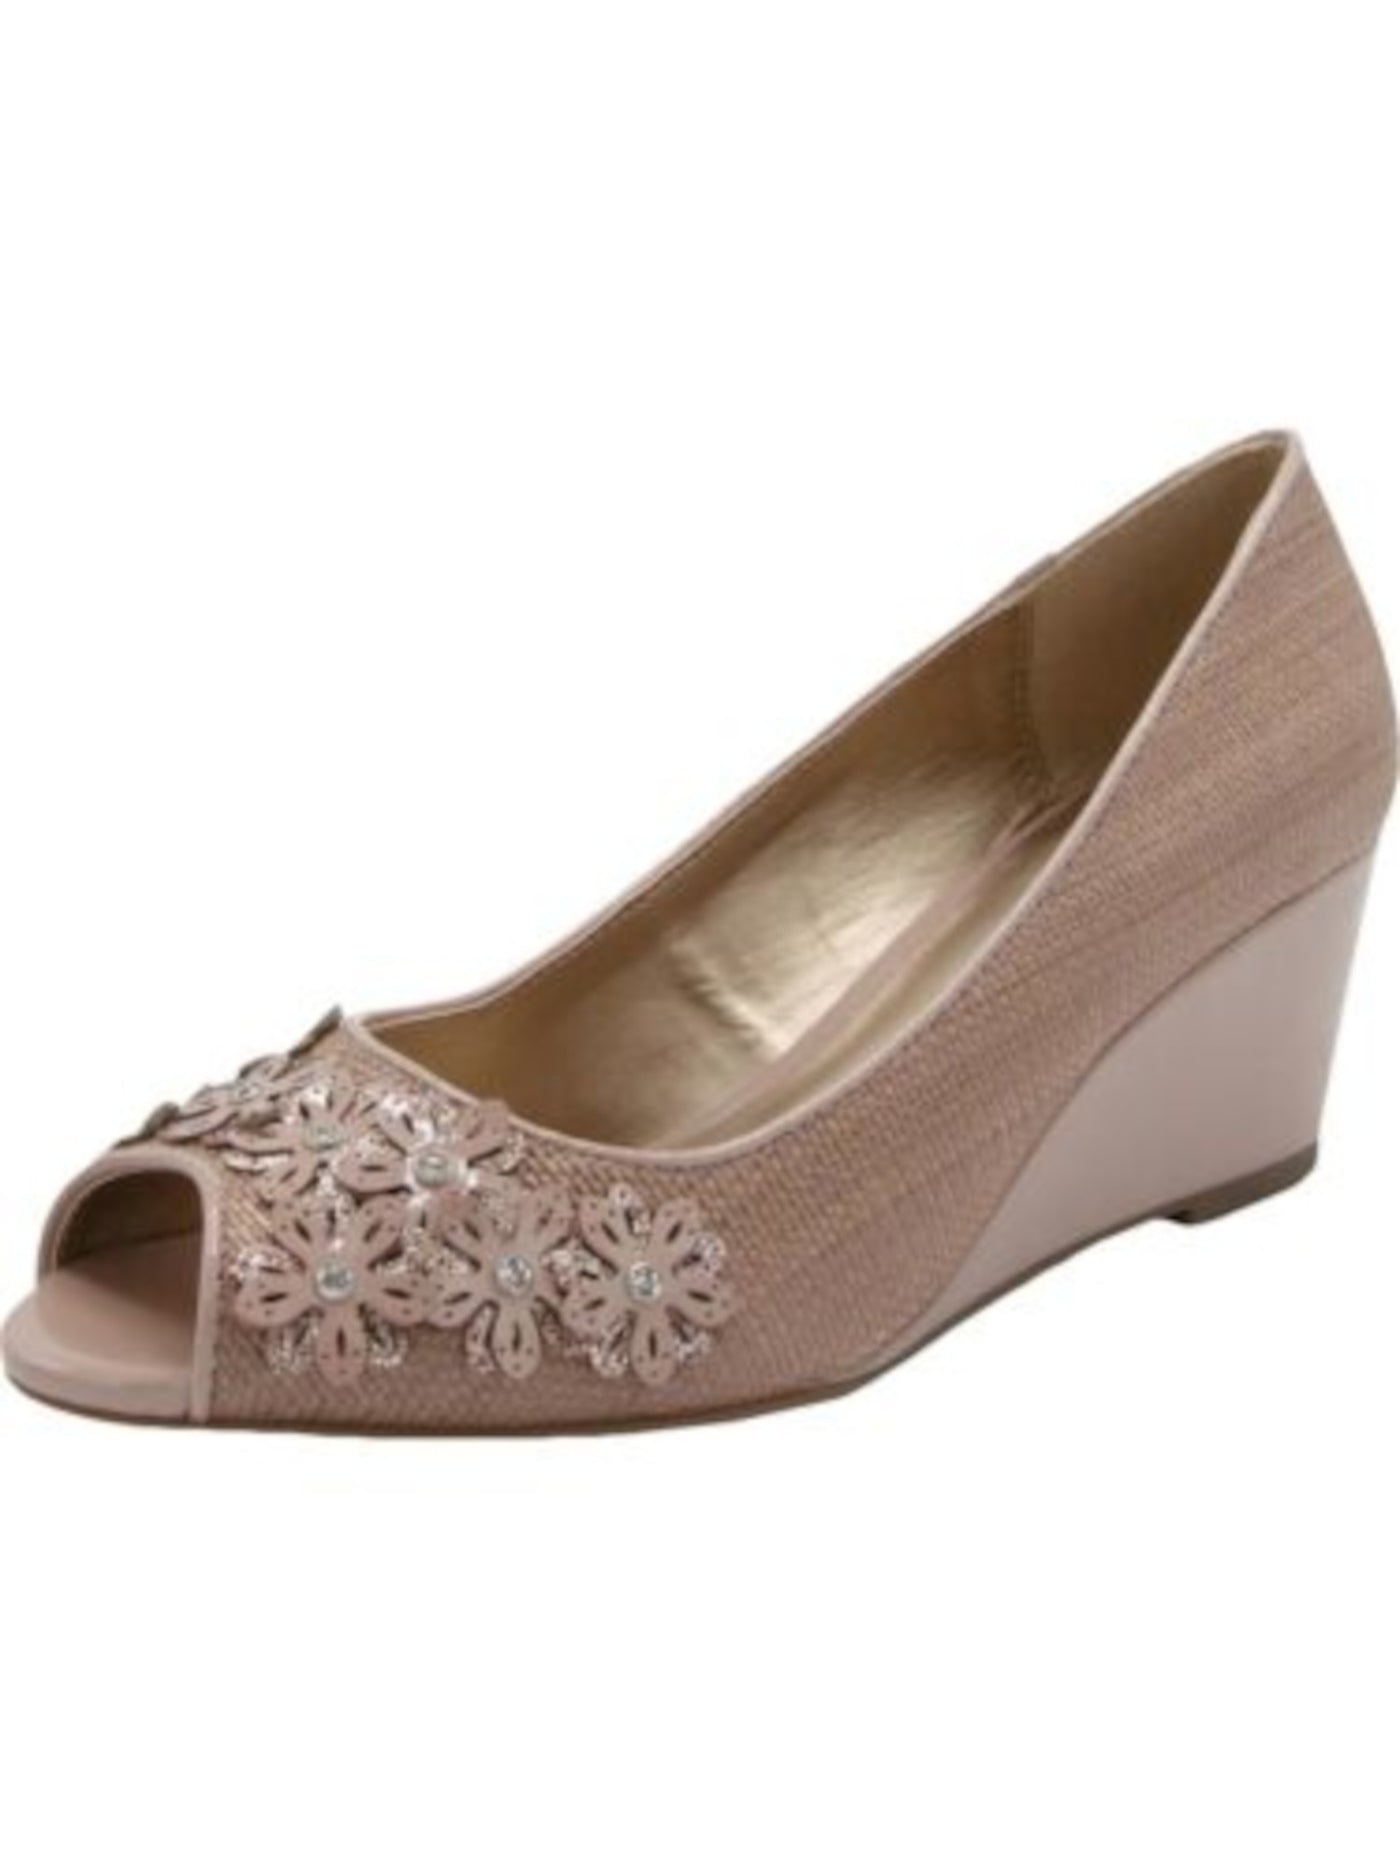 KAREN SCOTT Womens Beige Woven Pattern Floral Accents Padded Comfort Rhinestone Coraa Peep Toe Wedge Slip On Sandals Shoes 5.5 M